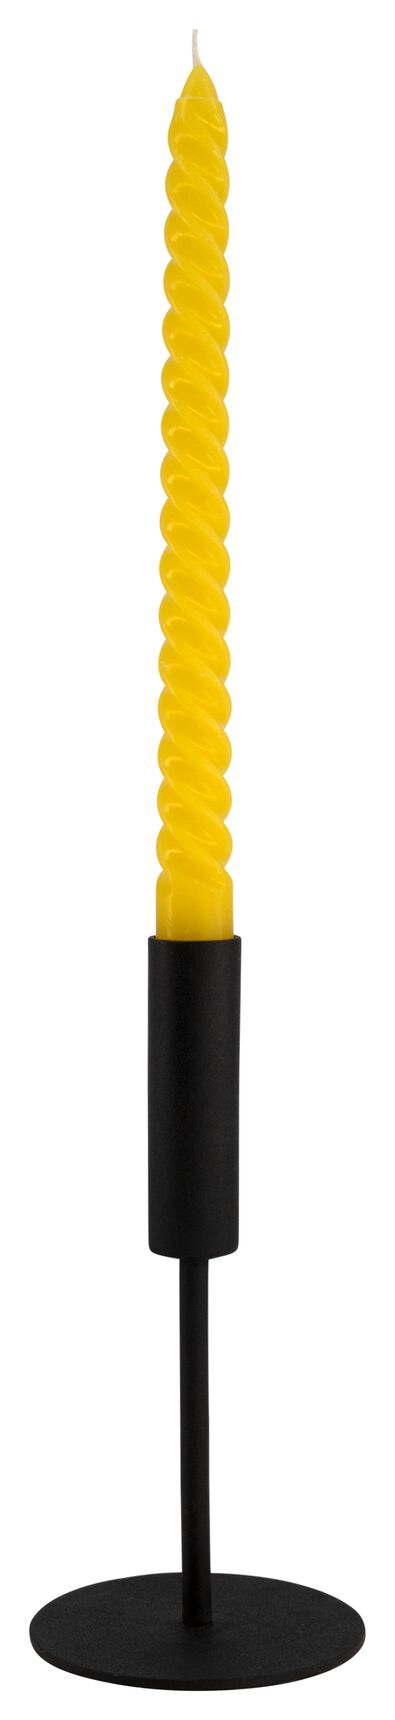 2 longues bougies dintérieur torsadées Ø2x25 jaune - 13506012 - HEMA